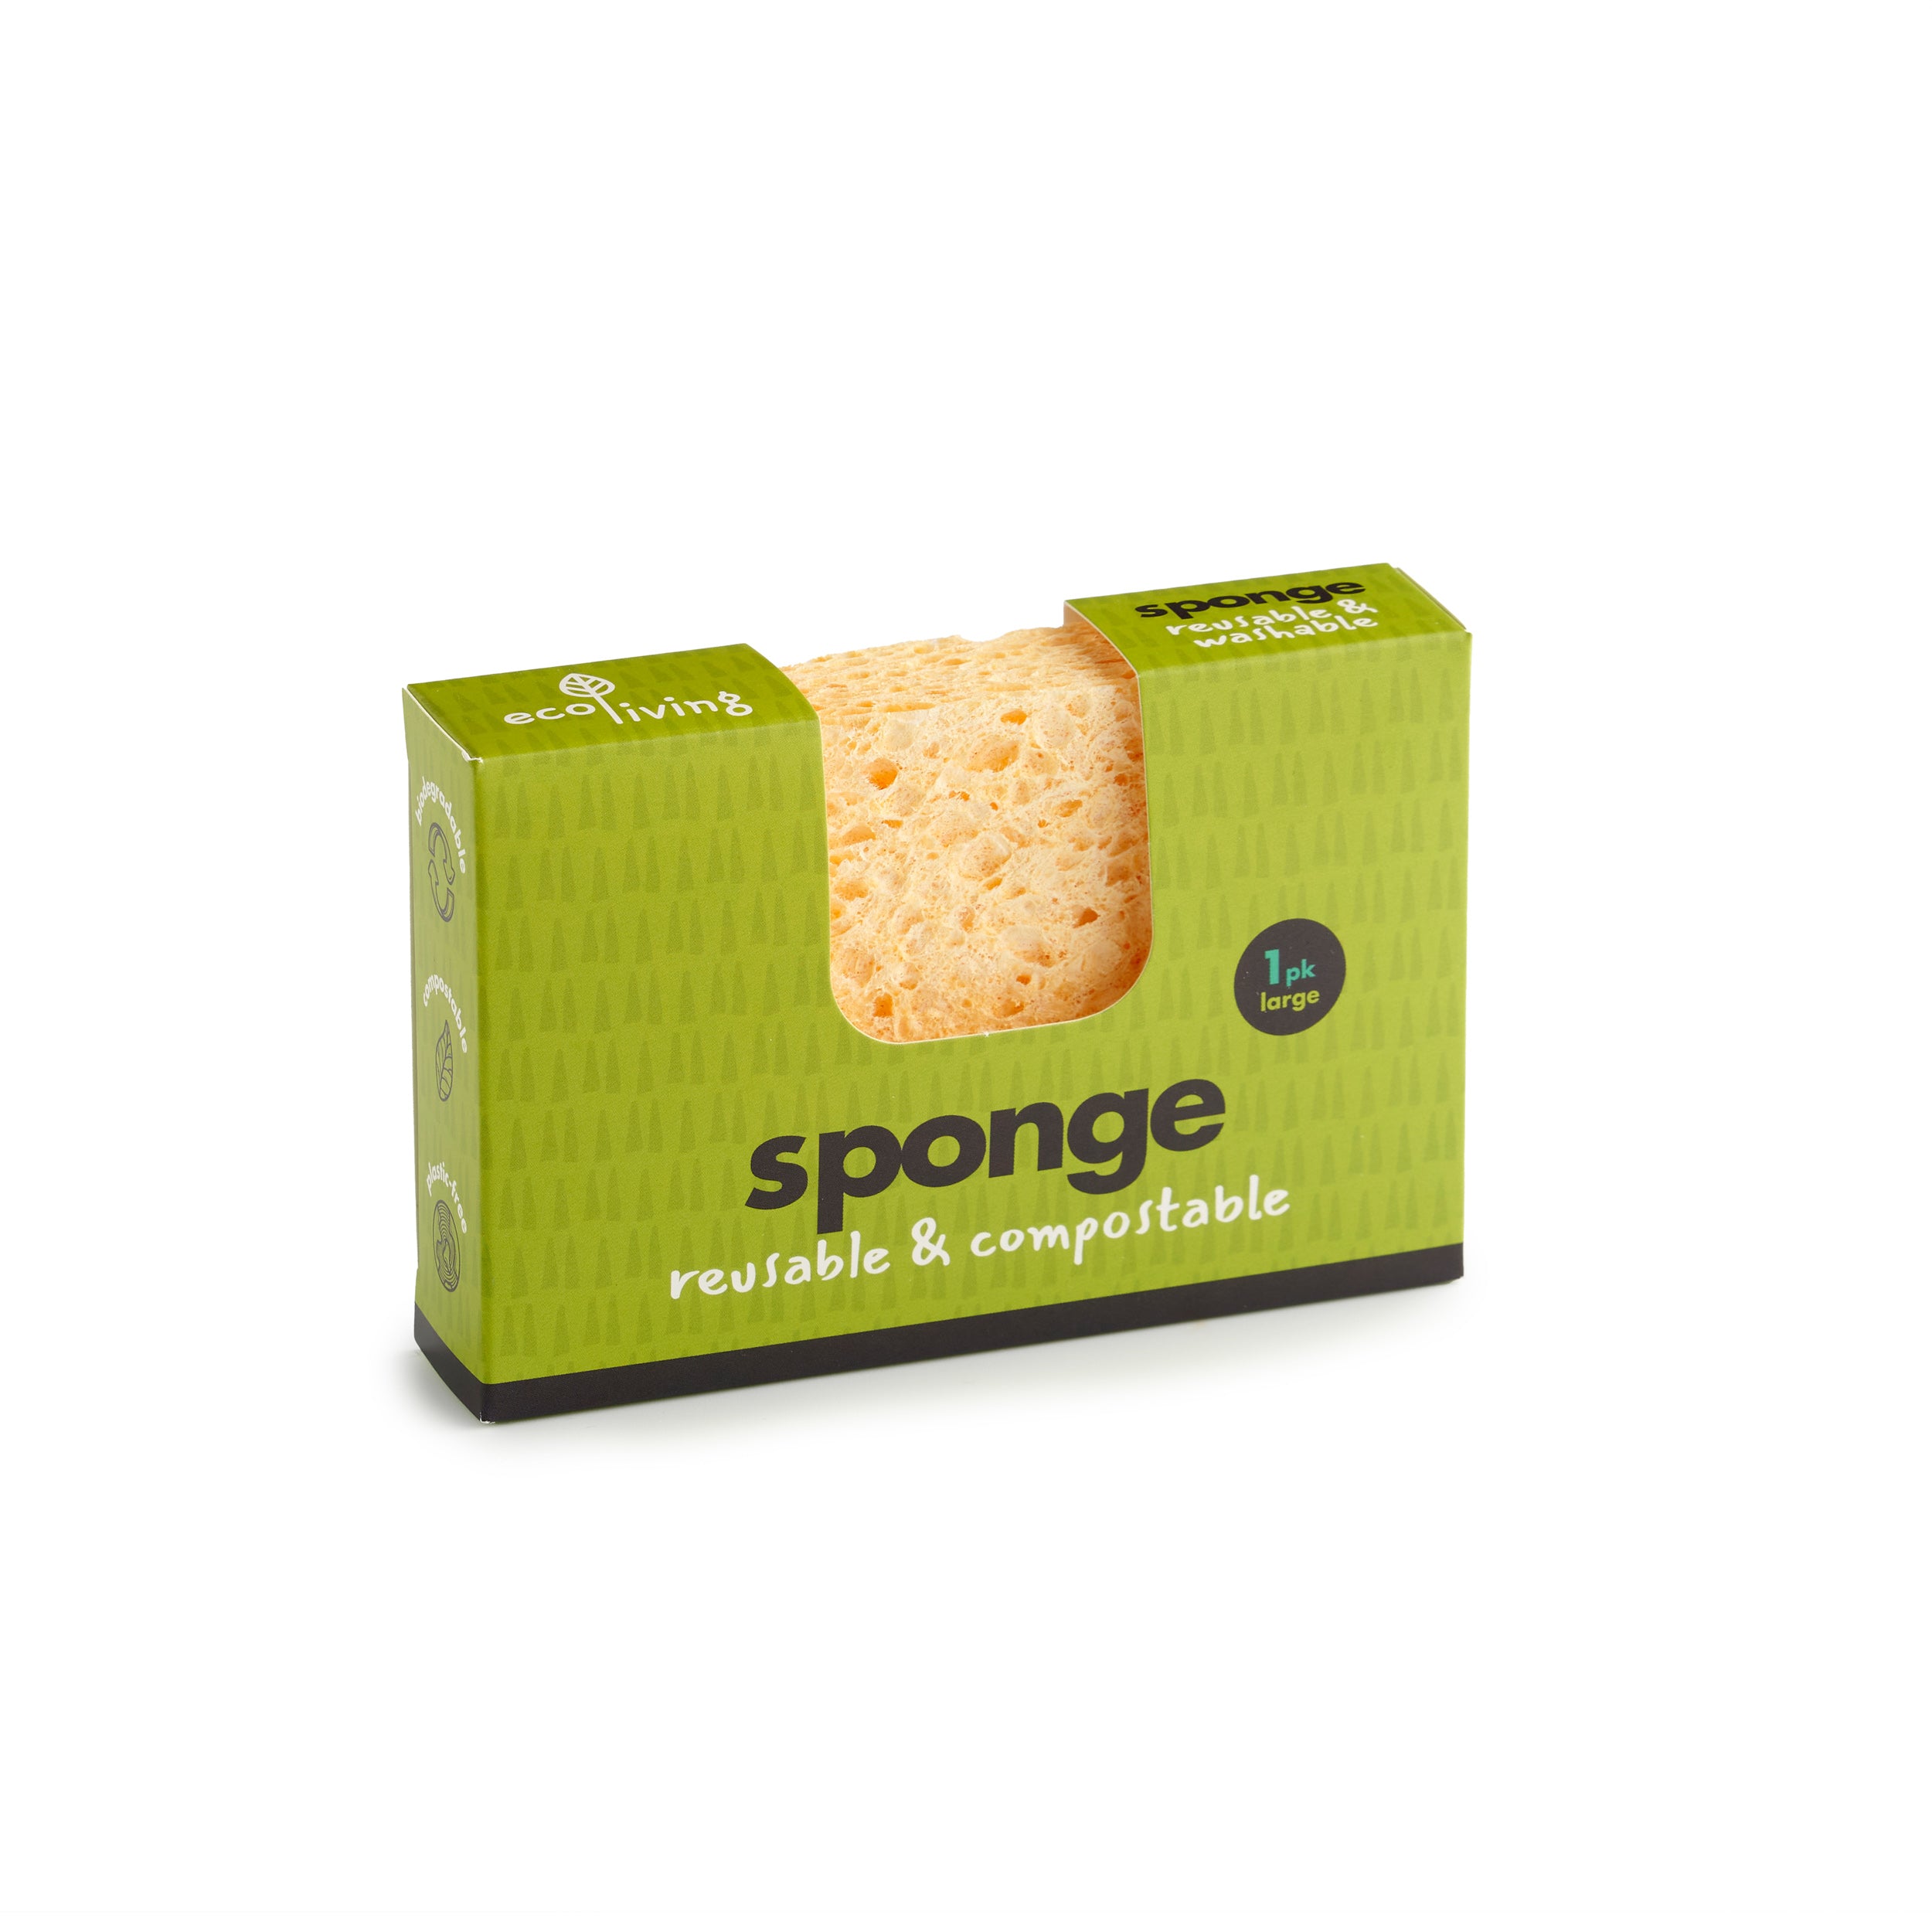 Large Eco Cellulose Sponge